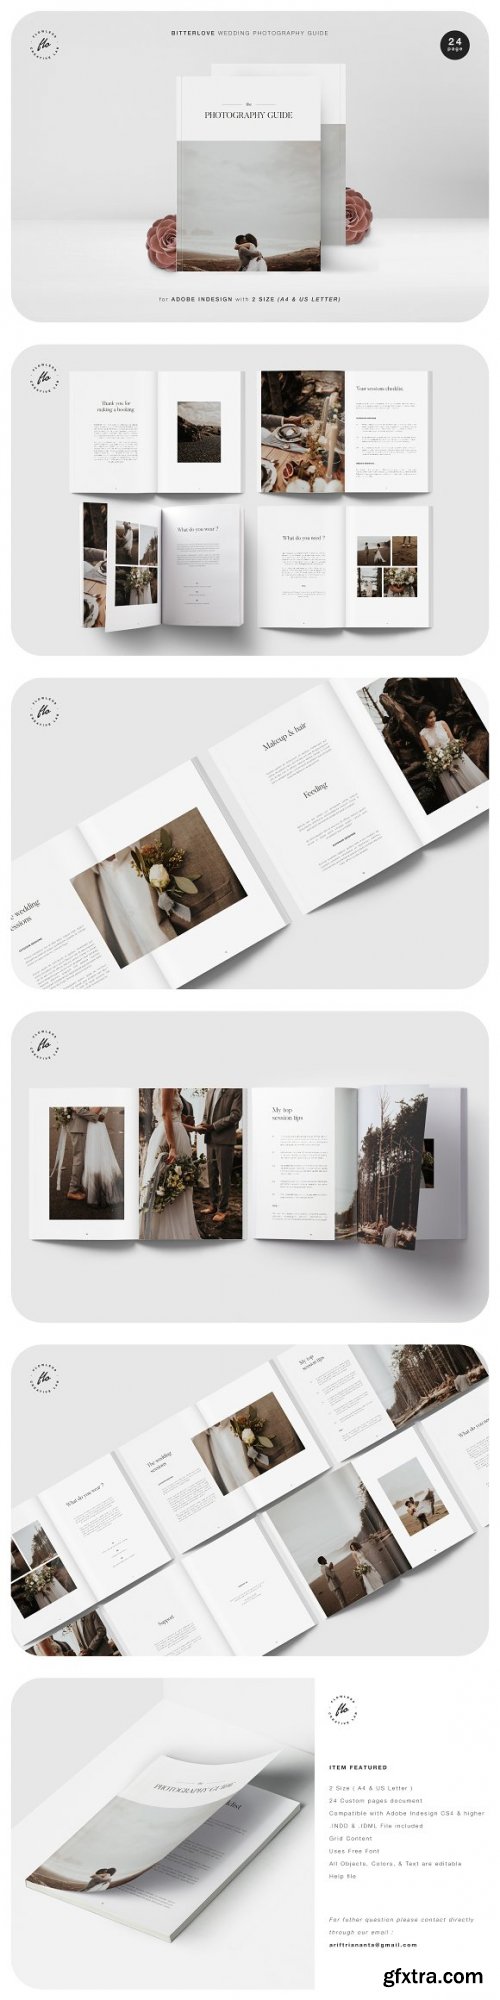 CreativeMarket - BITTERLOVE Wedding Photography Guide 3527779